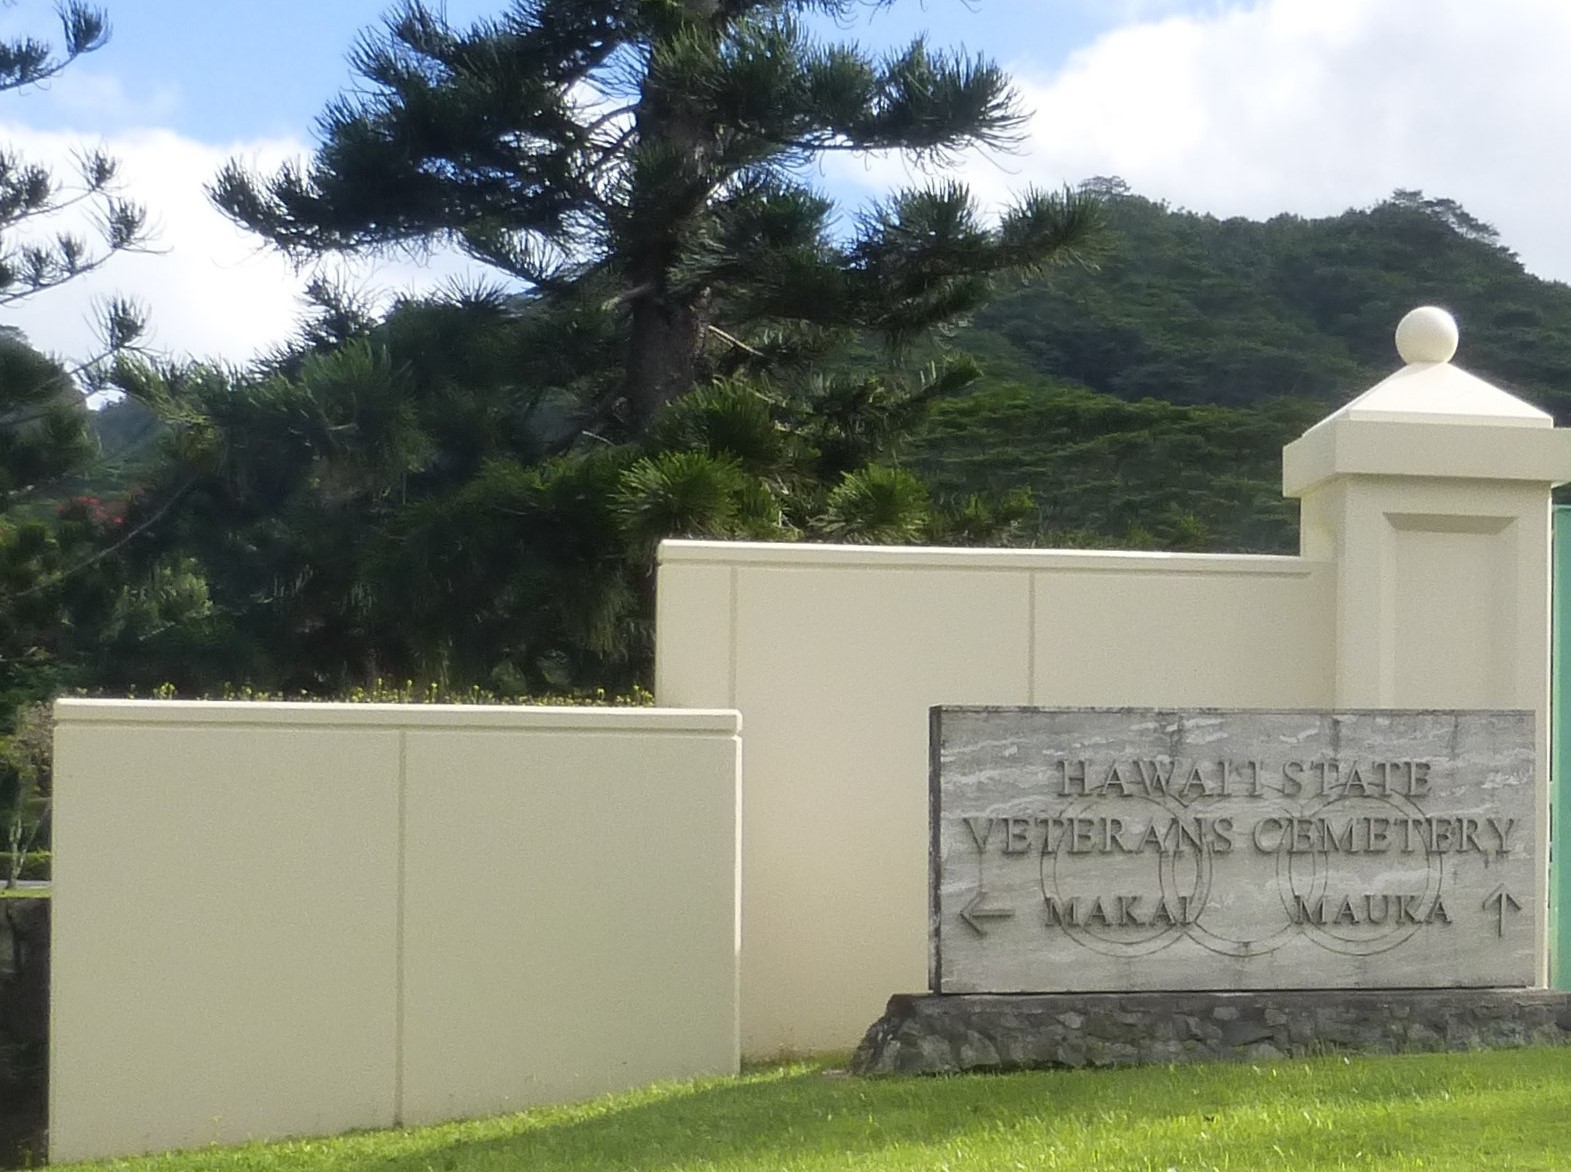 Hawaii state veterans cemetery